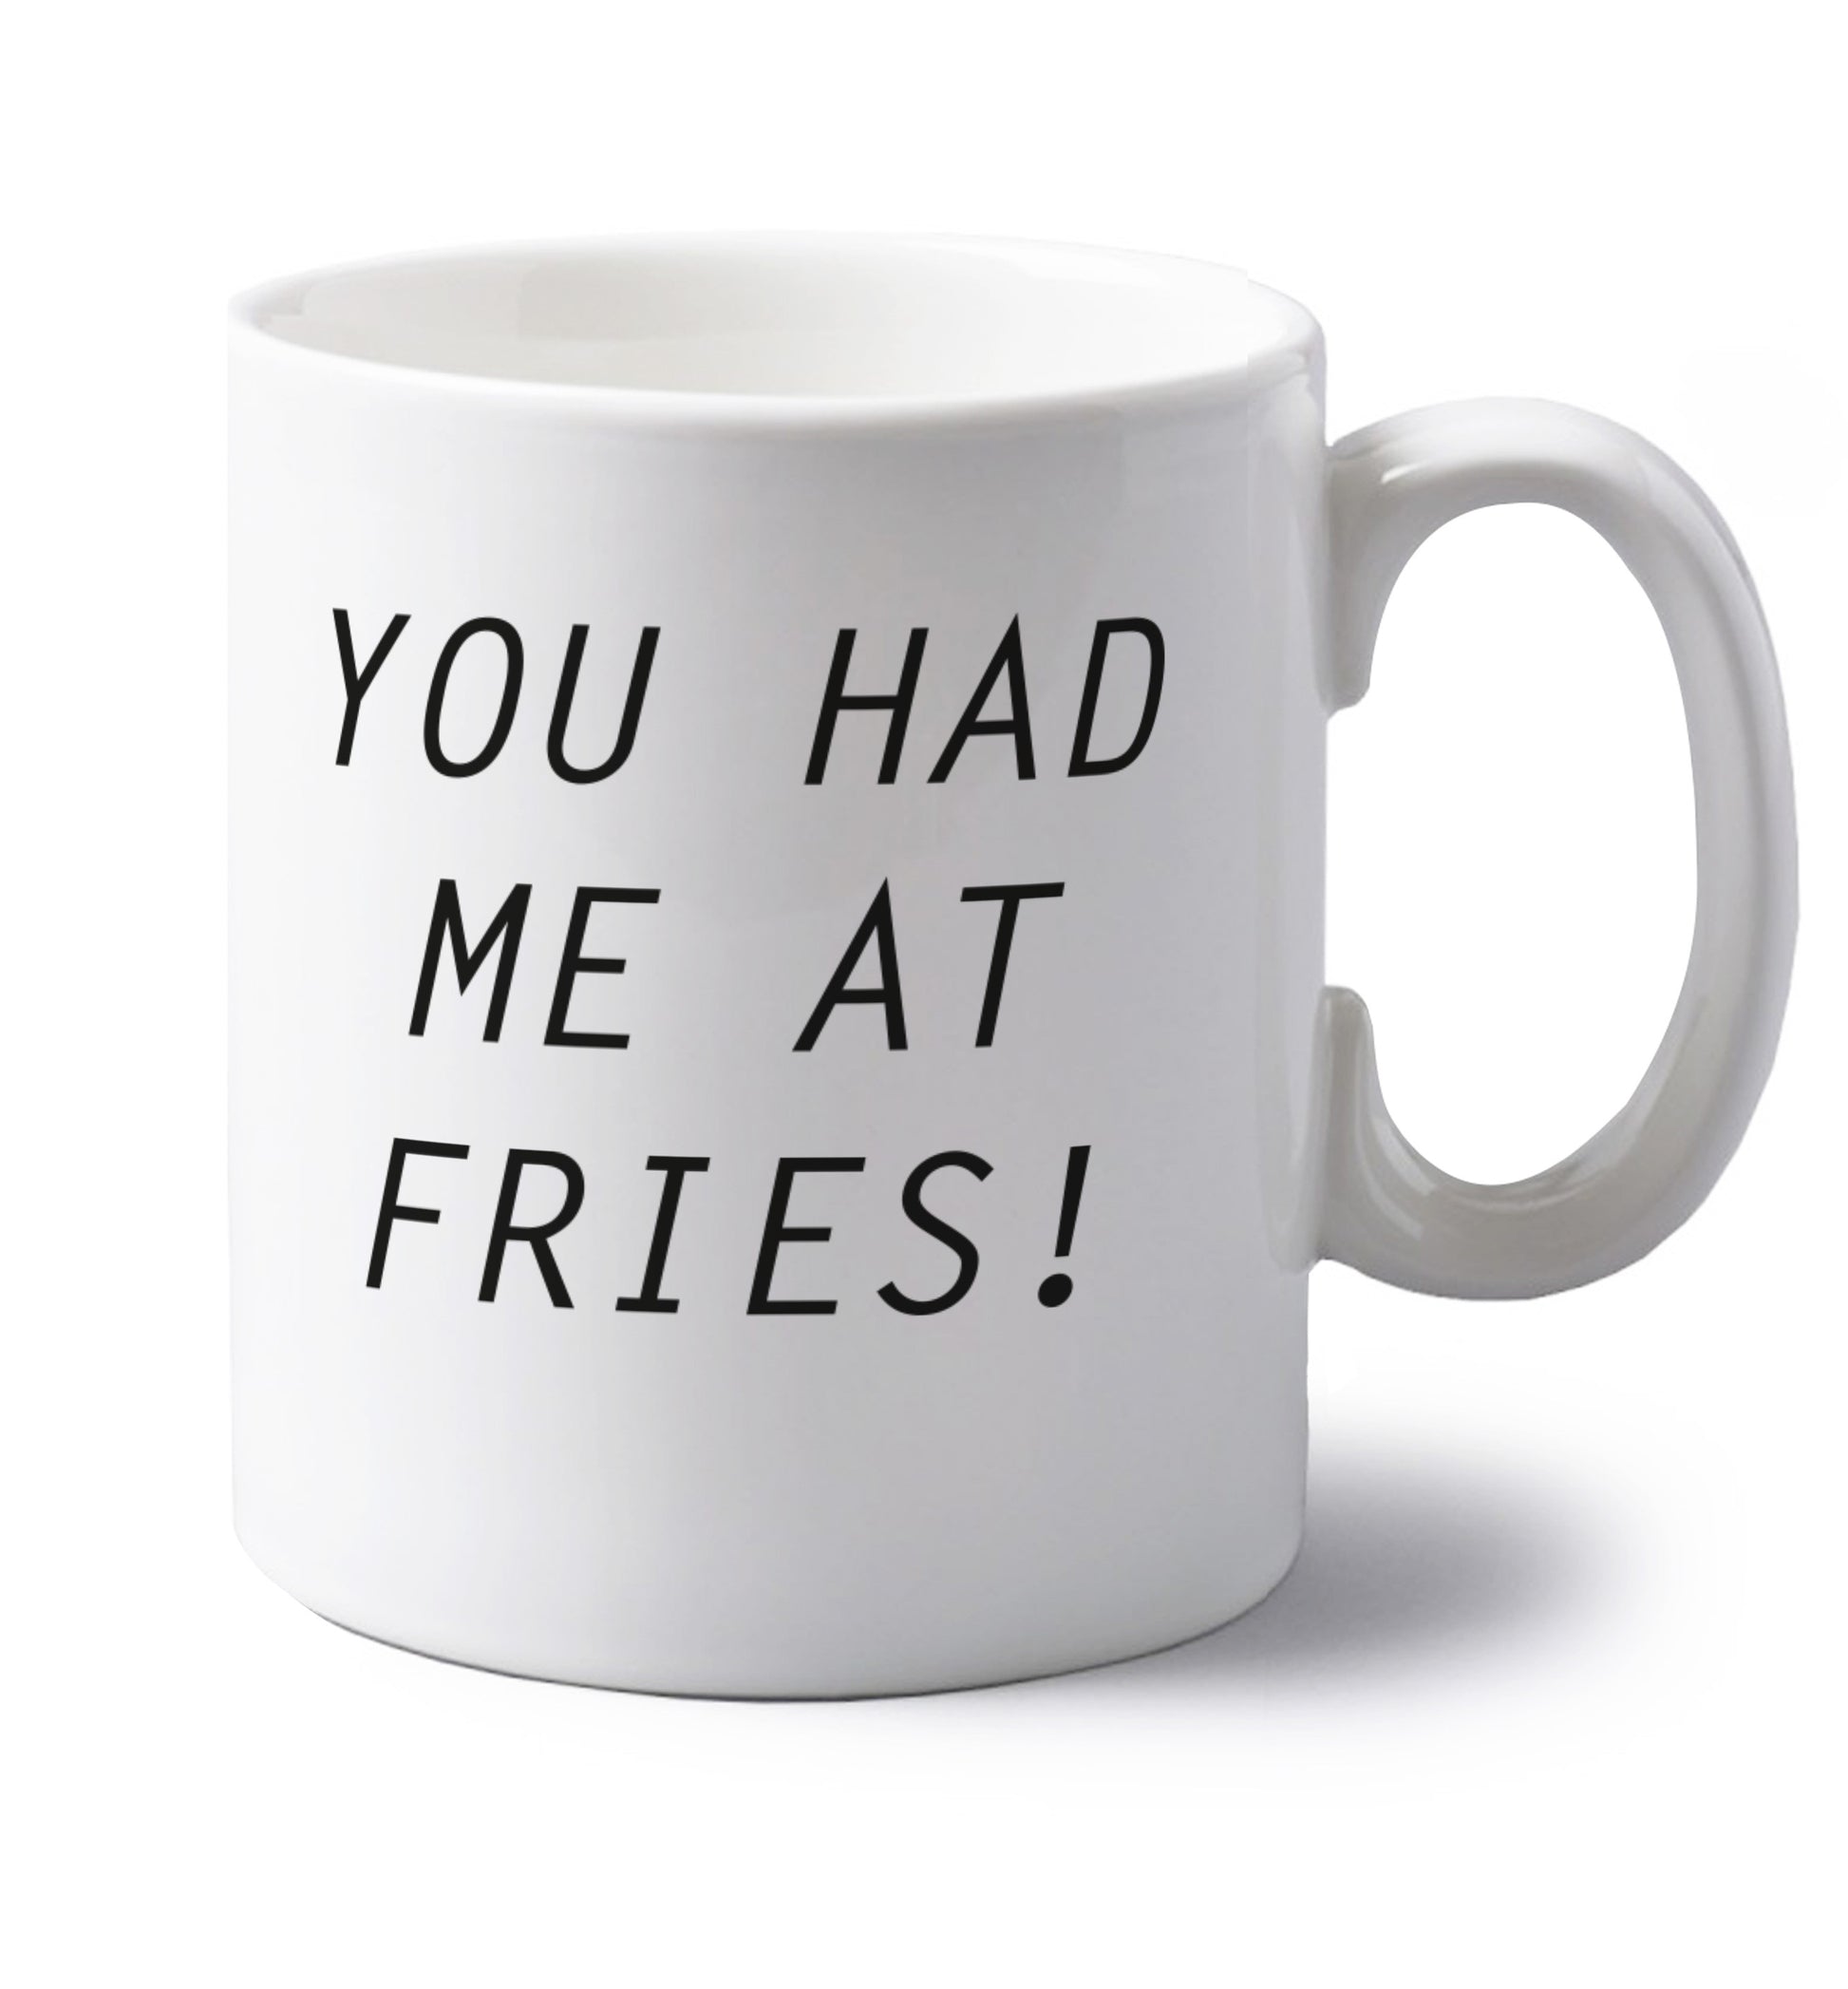 You had me at fries left handed white ceramic mug 